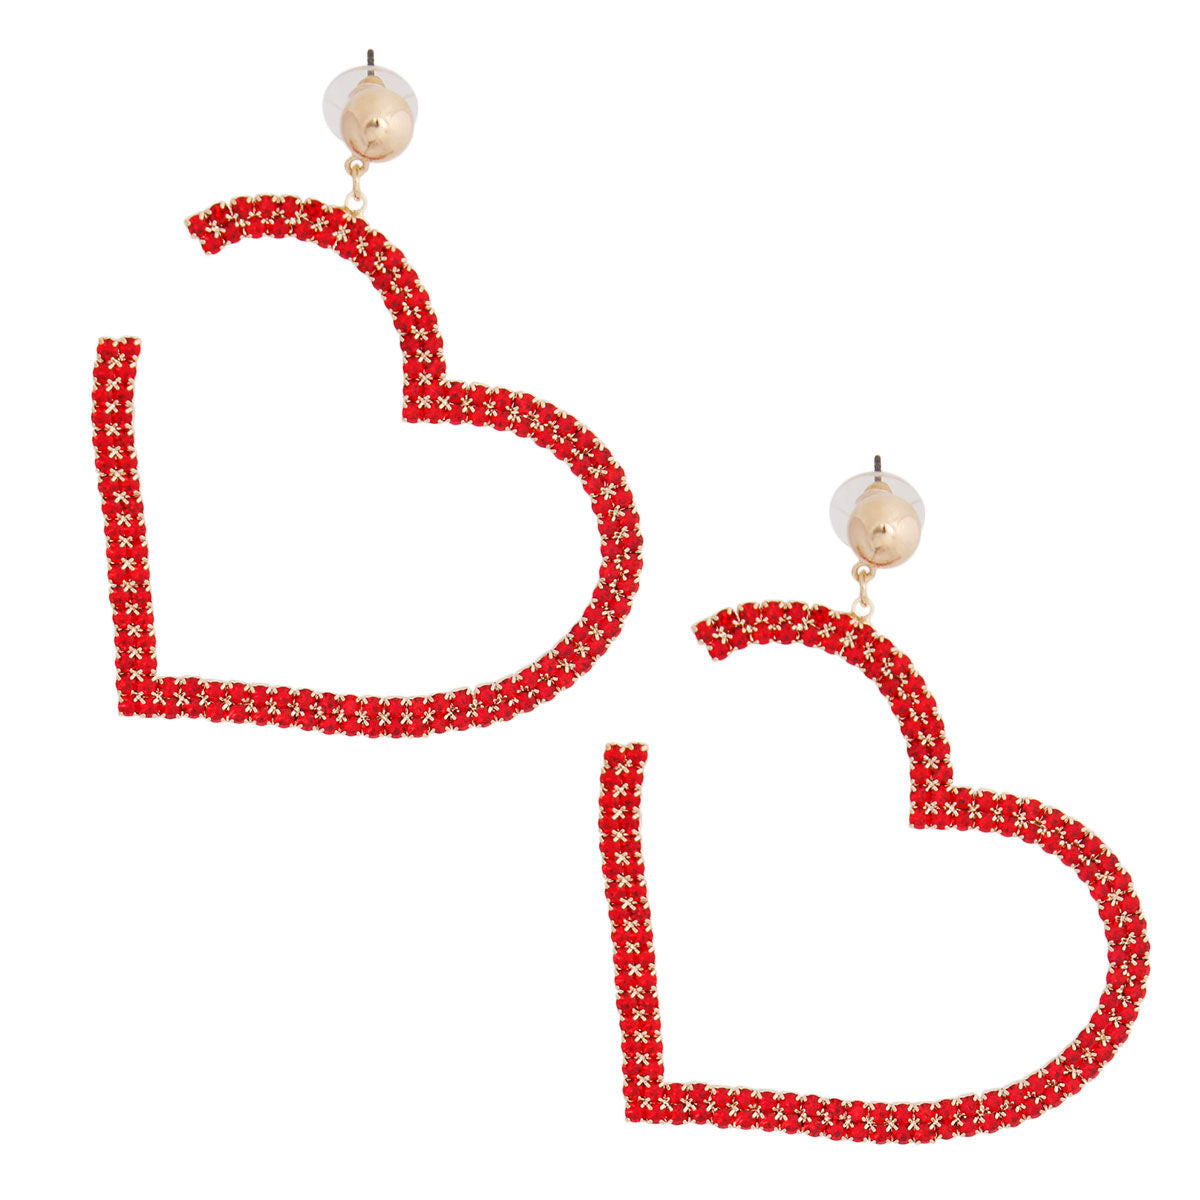 Red Pave Open Heart Earrings